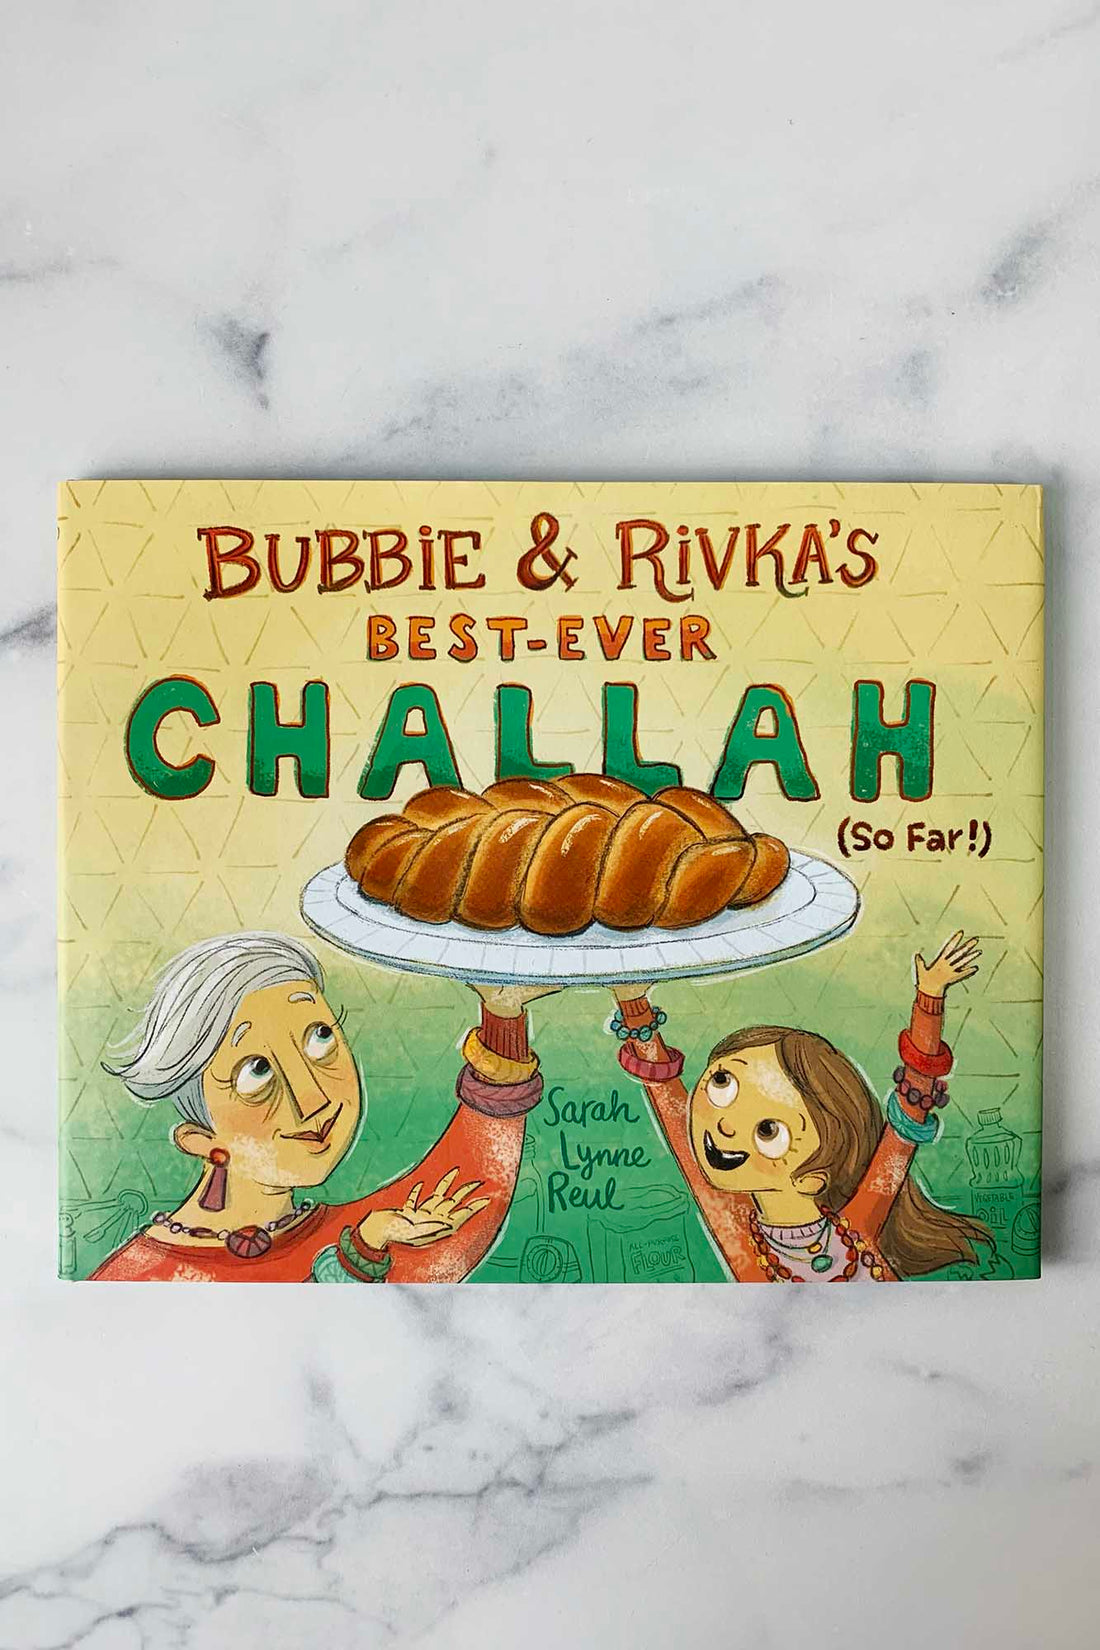 Bubbie & Rivka's Best-Ever Challah (So Far!)